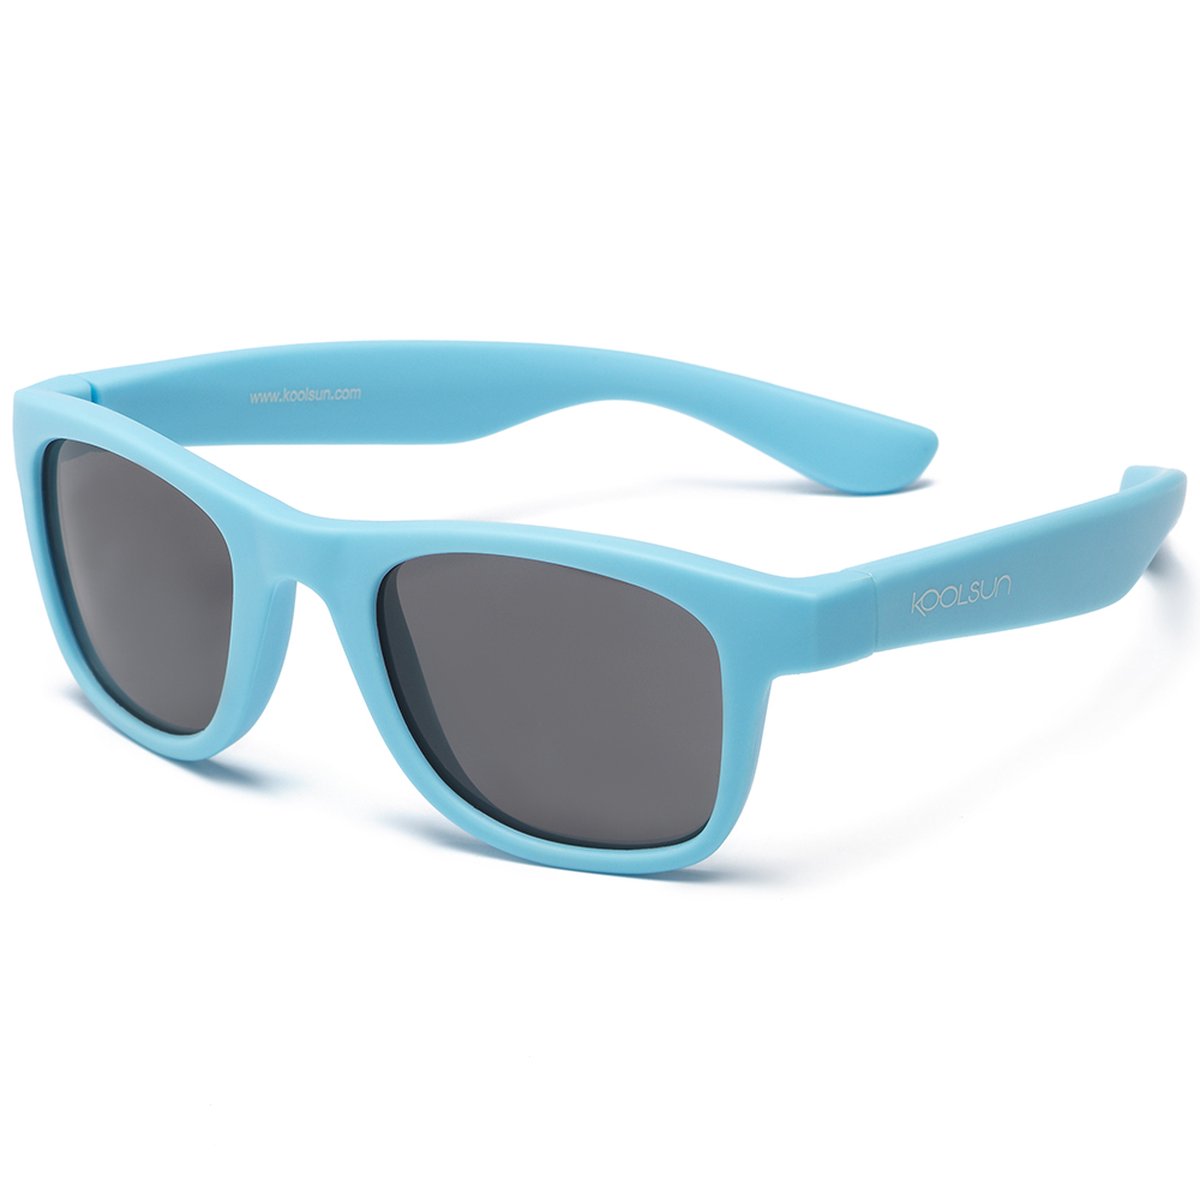 KOOLSUN - Wave - Kinder zonnebril - Sky Blauw - 3-10 Jaar - UV400 - Categorie 3